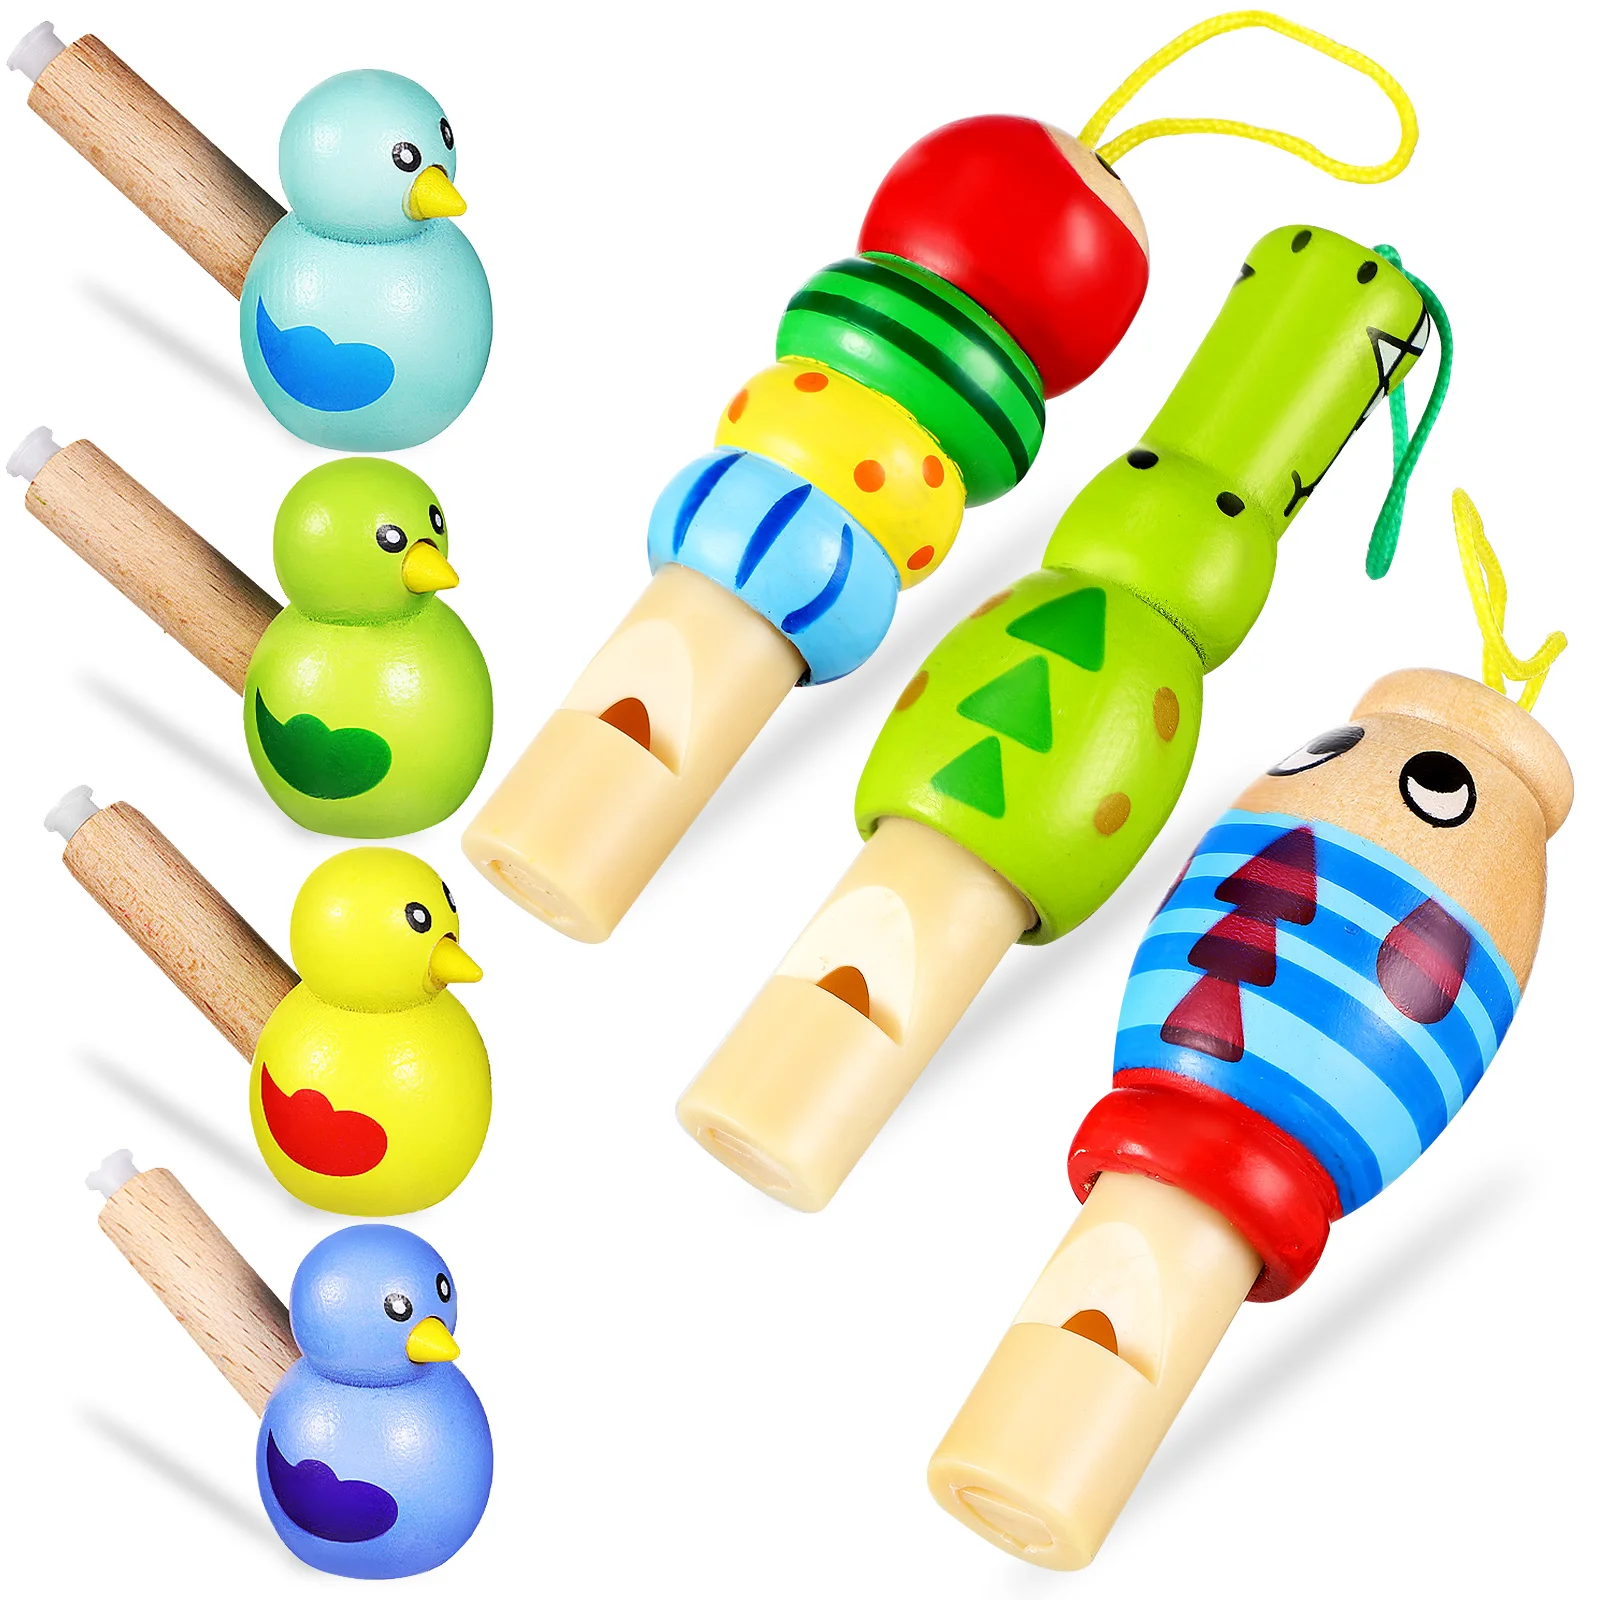 

7 Pcs Bulk Animal Whistle Toddler Baby Musical Toys Slide Pvc Wooden Whistles Lanyard